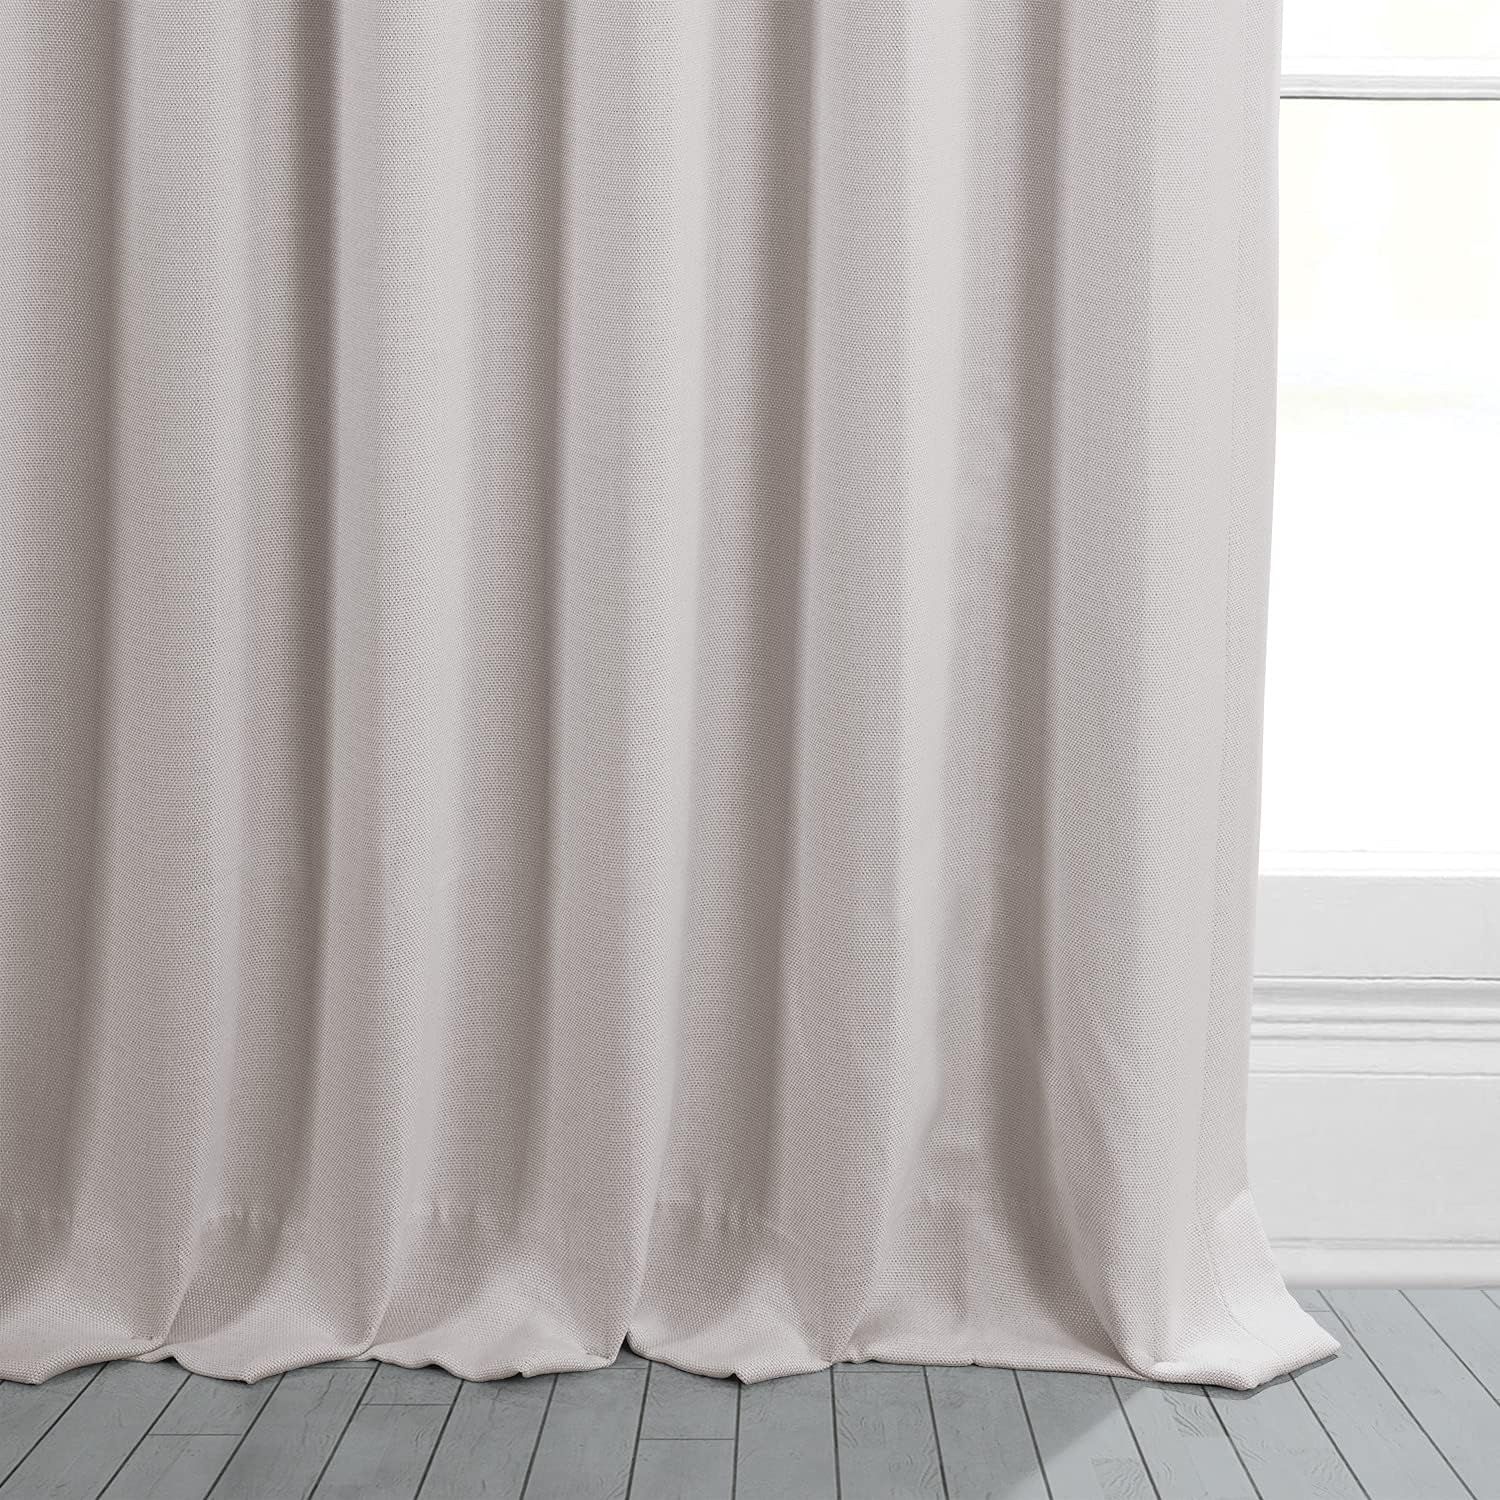 HPD Half Price Drapes BOCH-LN185-P Faux Linen Room Darkening Curtain (1 Panel) 50 X 96, BOCH-LN18... | Amazon (US)